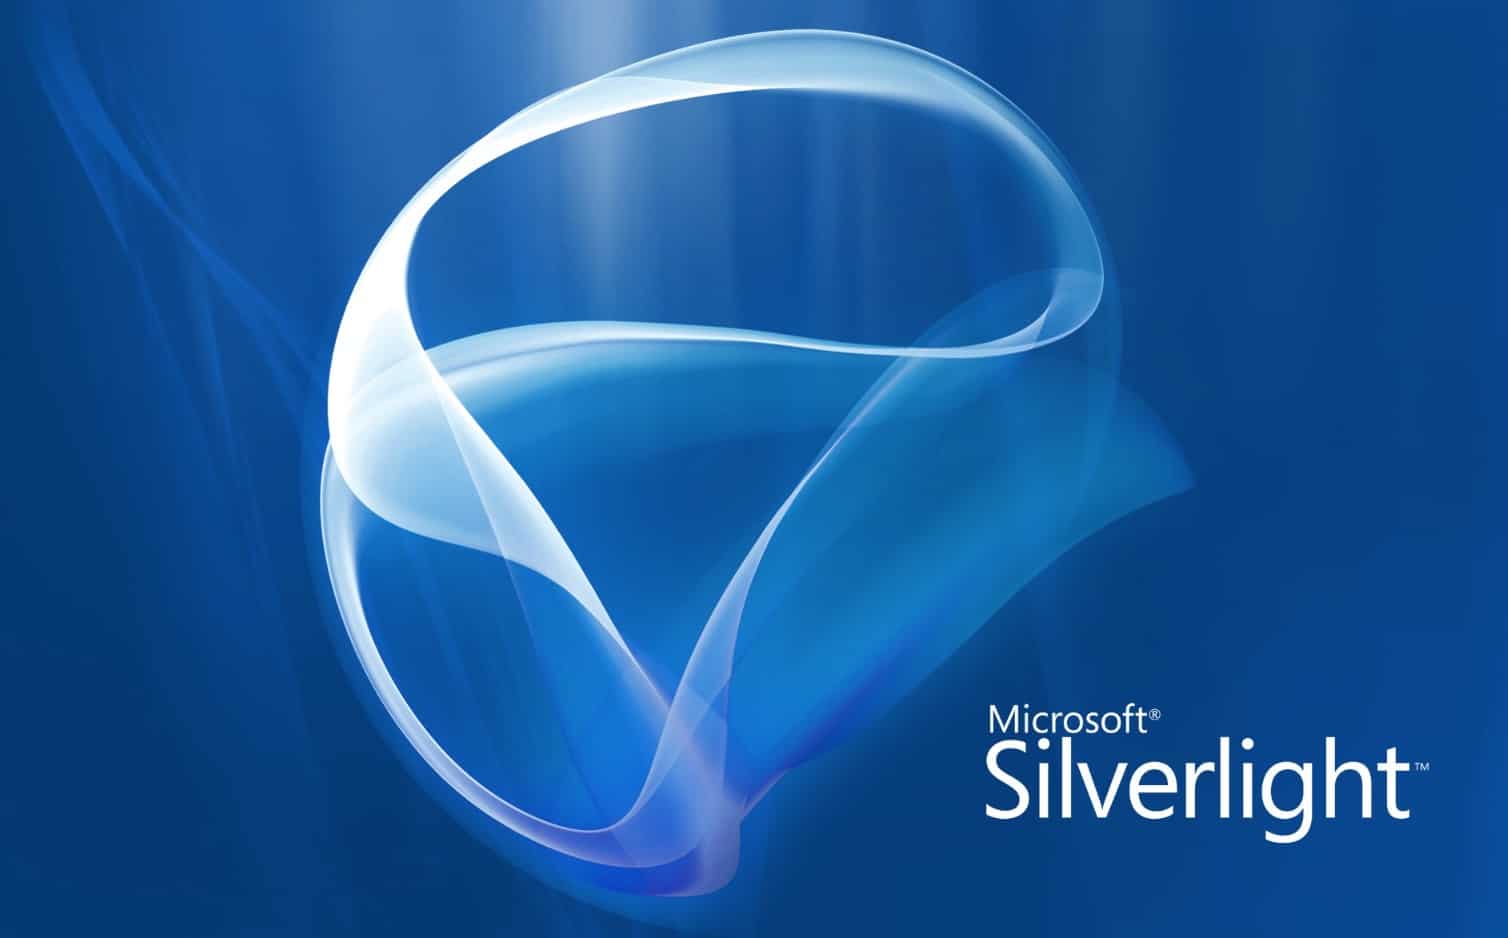 install silverlight for netflix on mac